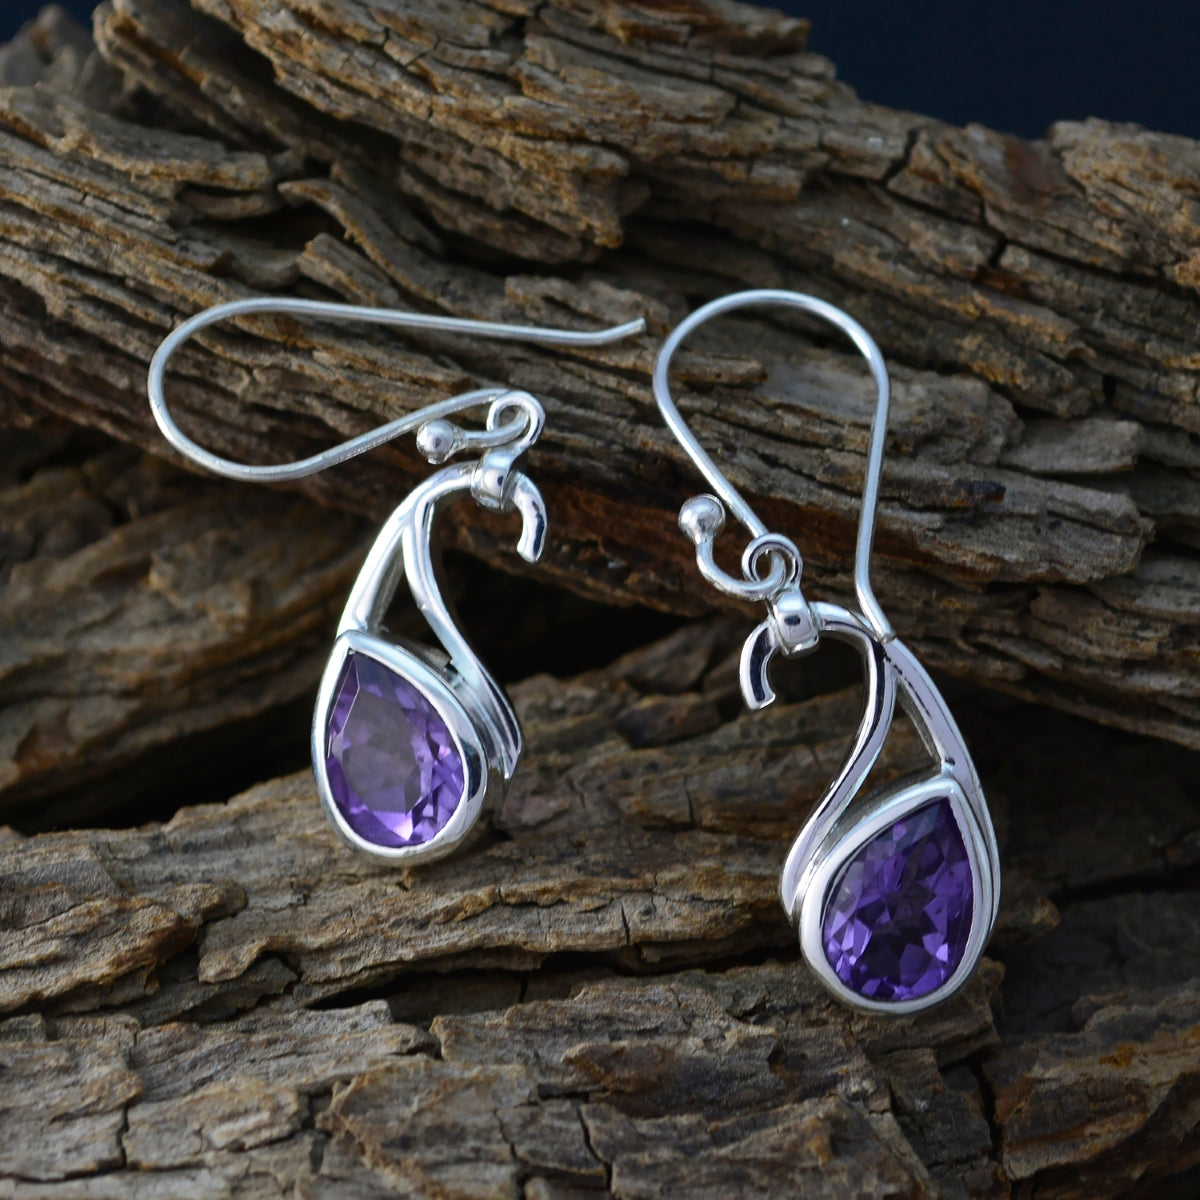 Riyo Genuine Gems Pear Faceted Purple Amethyst Silver Earring gift for engagement